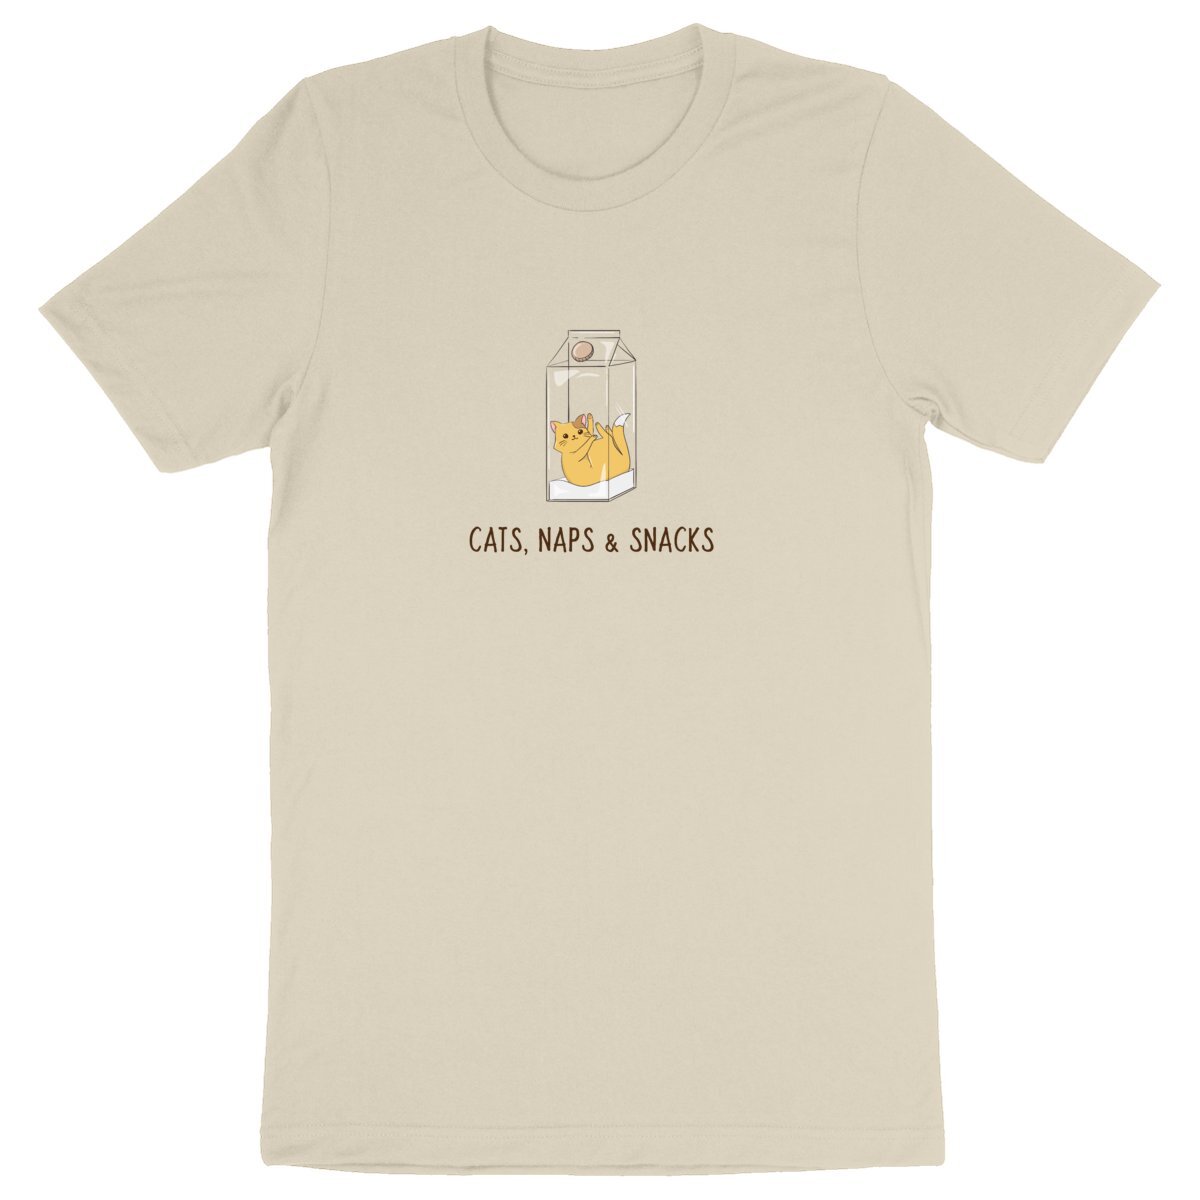 Cats, Naps & Snacks - Unisex Organic T-shirt